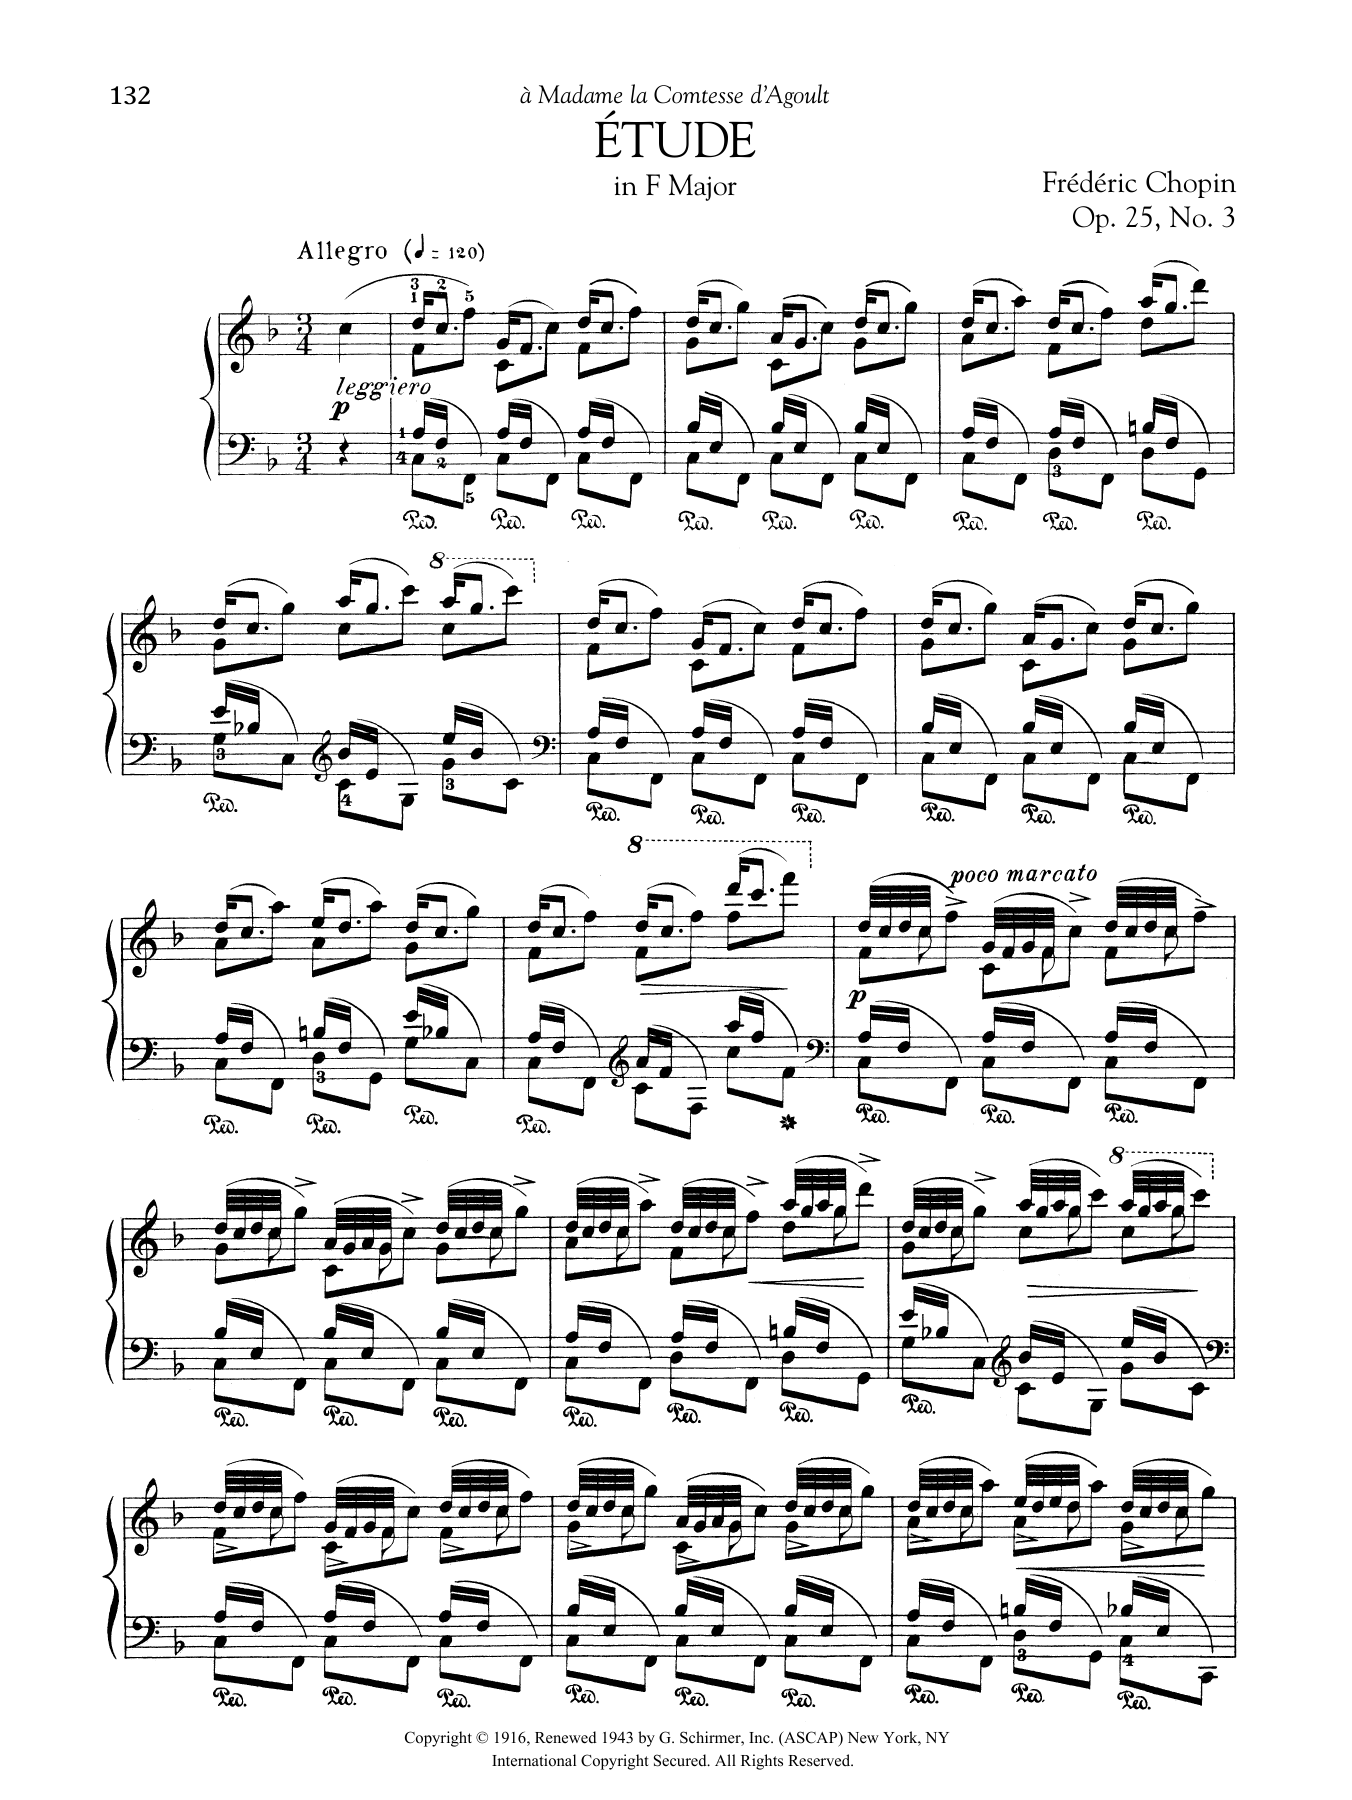 Download Frederic Chopin Etude in F Major, Op. 25, No. 3 Sheet Music